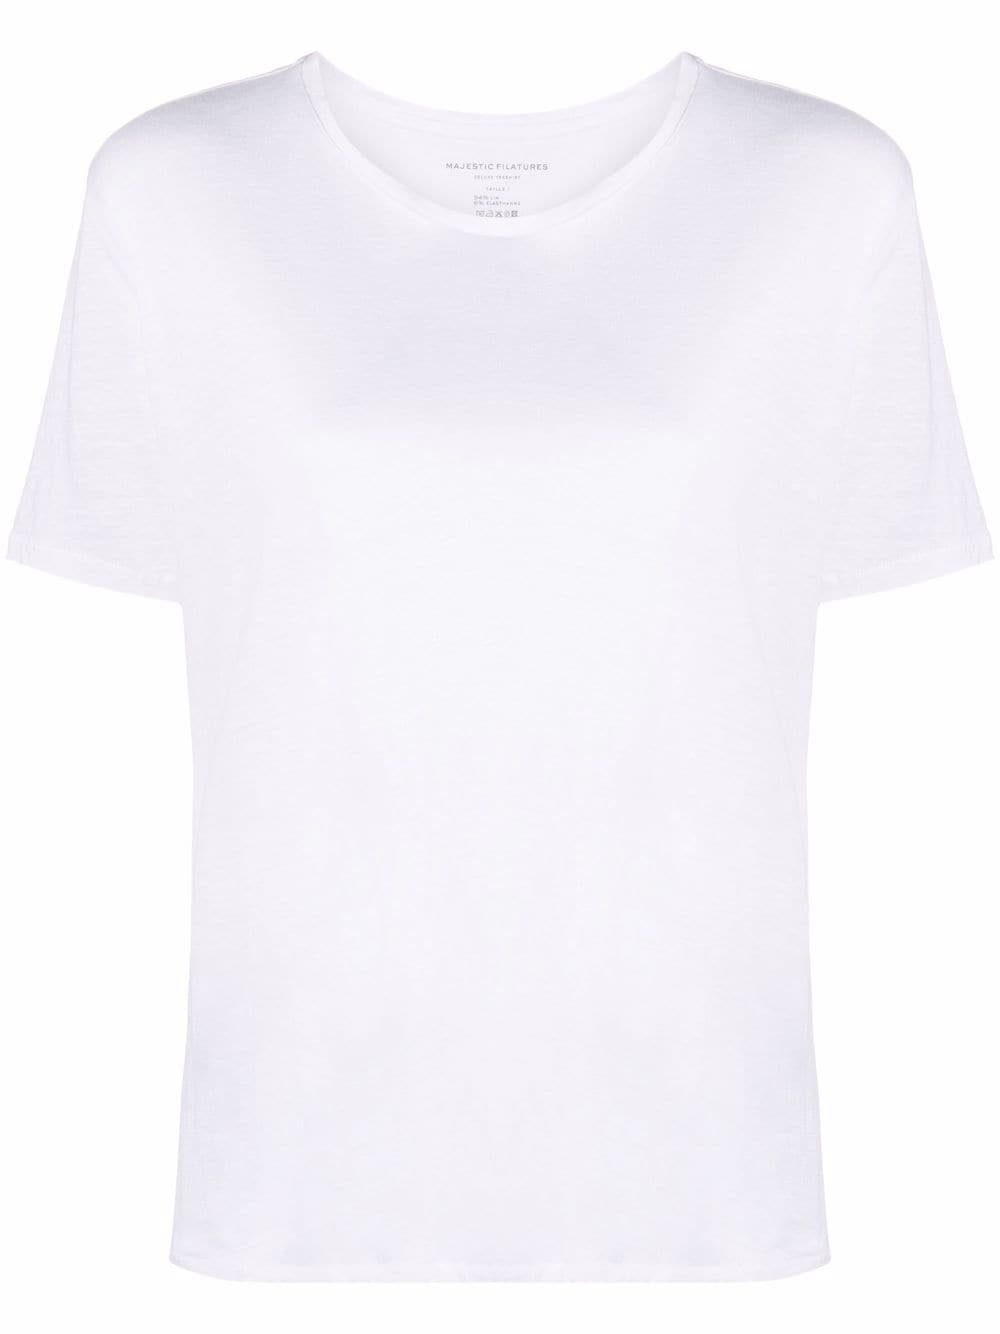 Majestic Filatures lightweight linen-blend T-shirt - White von Majestic Filatures